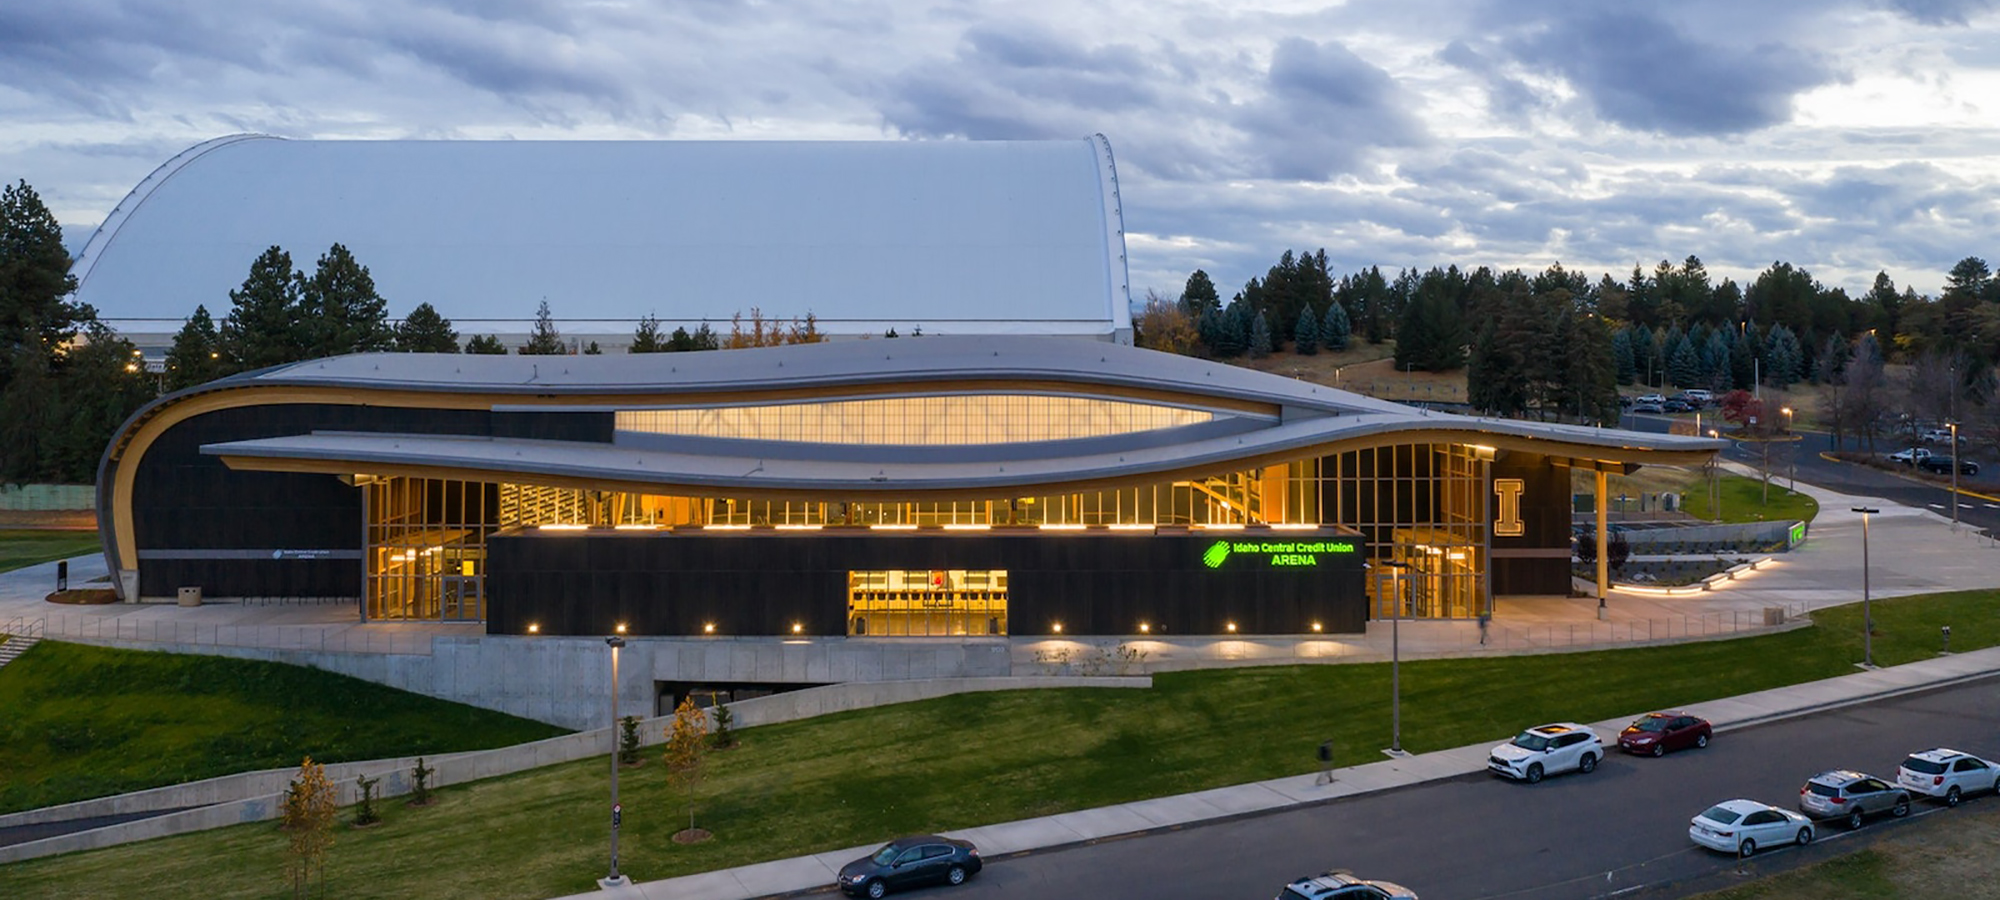 Salle omnisports de l'Idaho Central Credit Union - Grande salle omnisports en bois